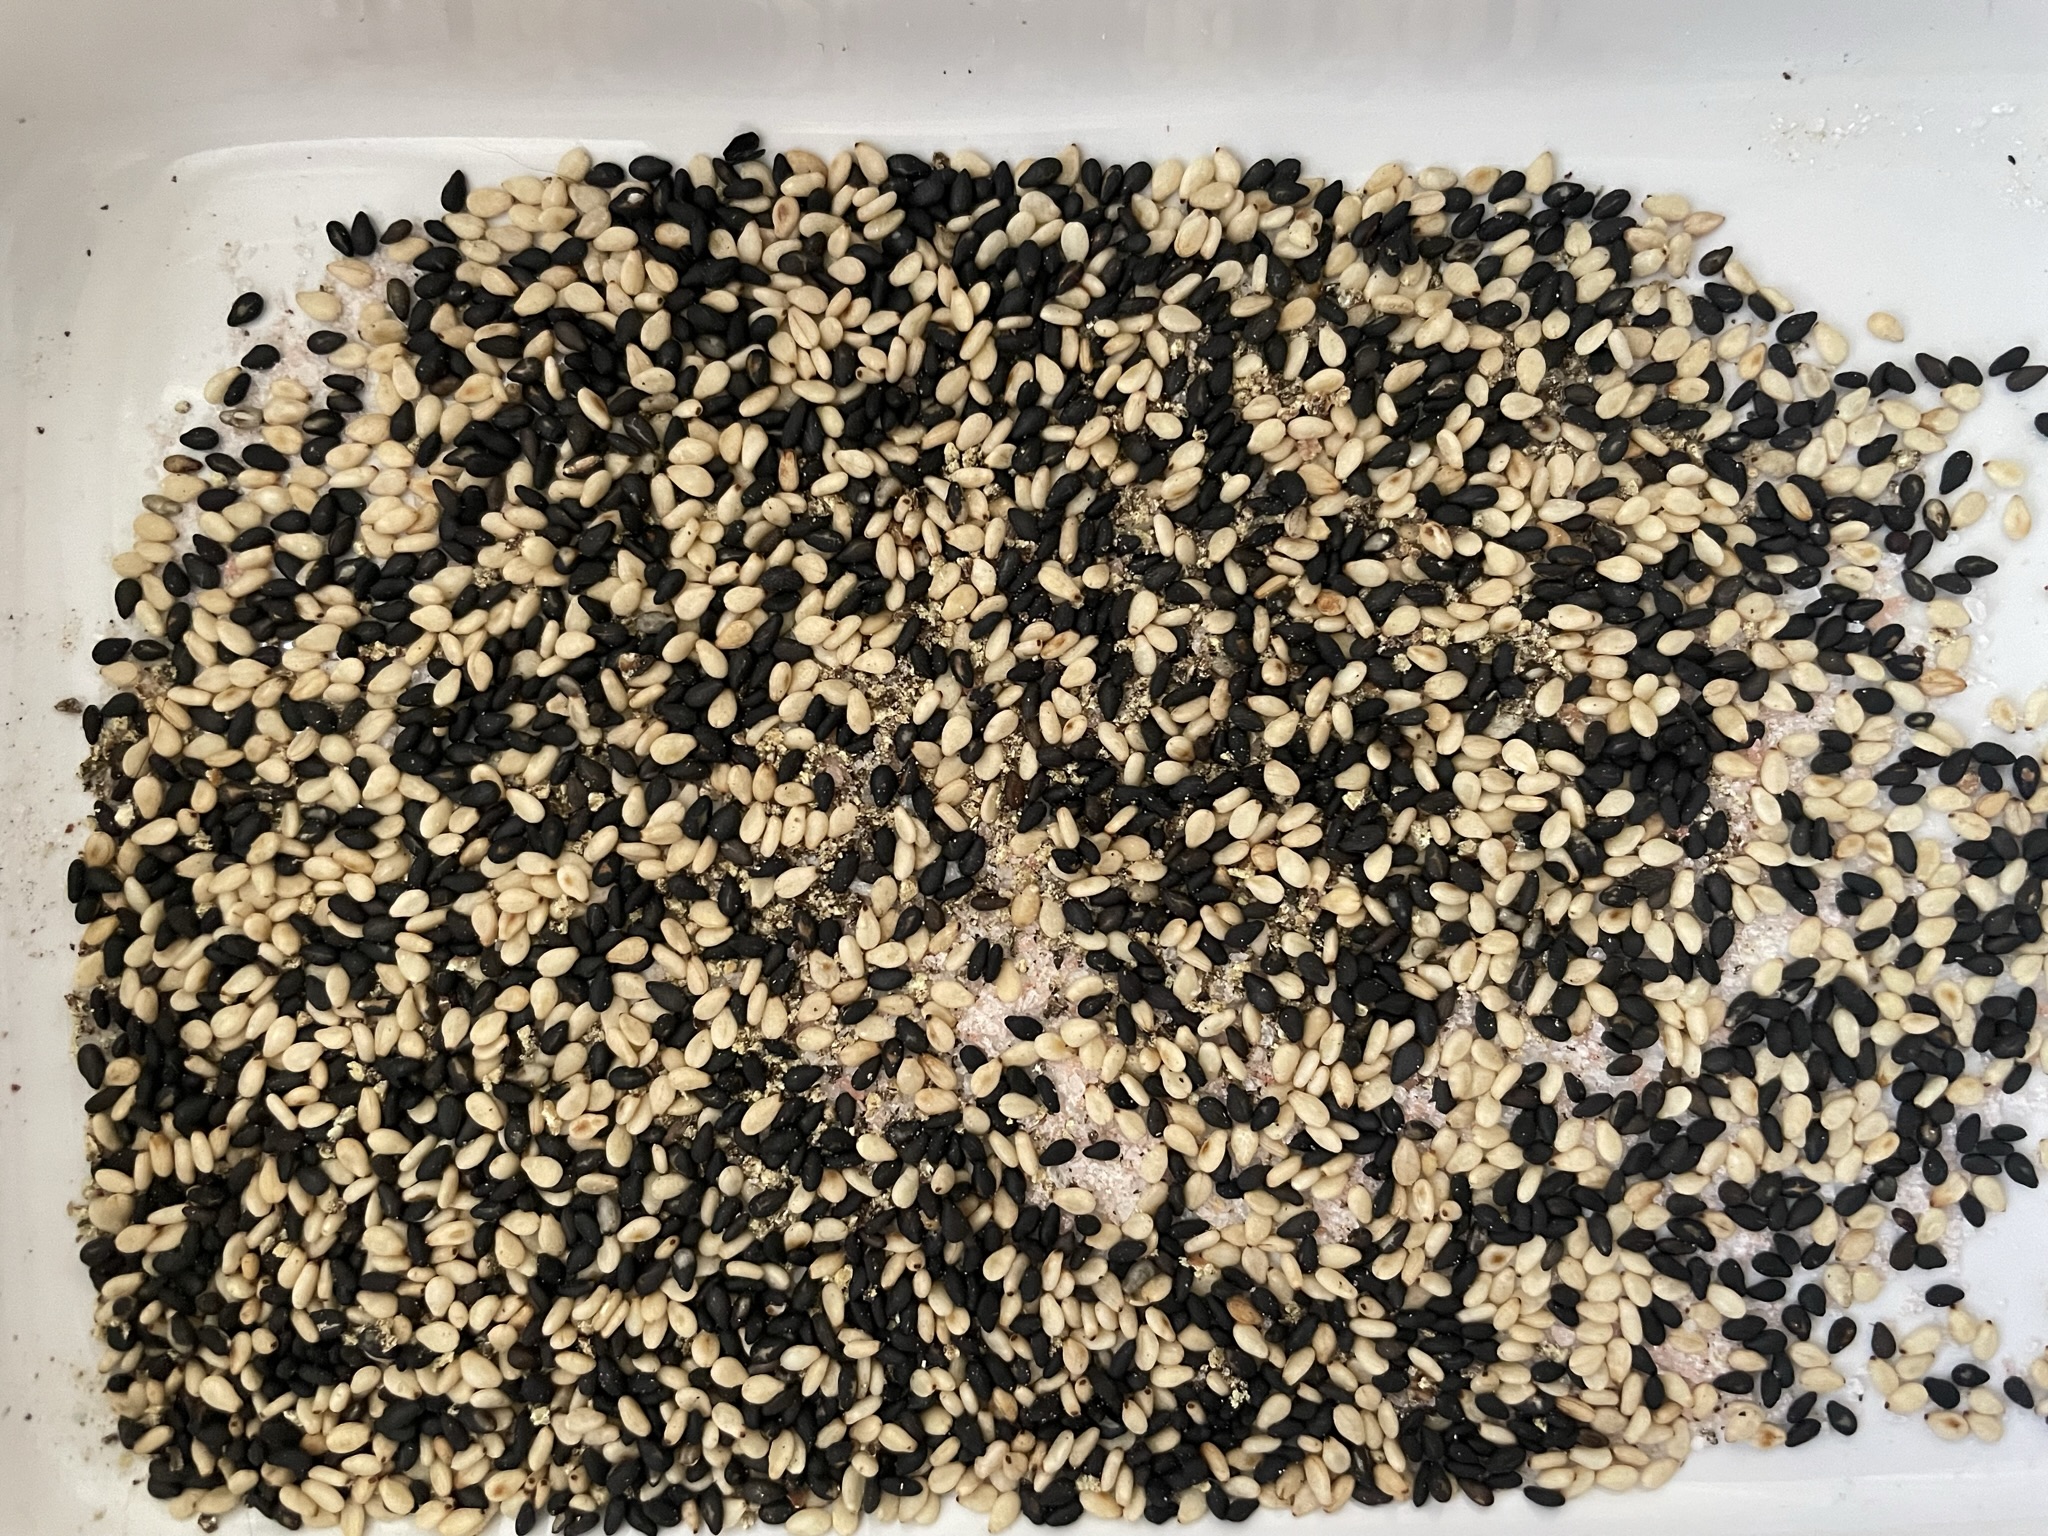 Sesame seed mixture